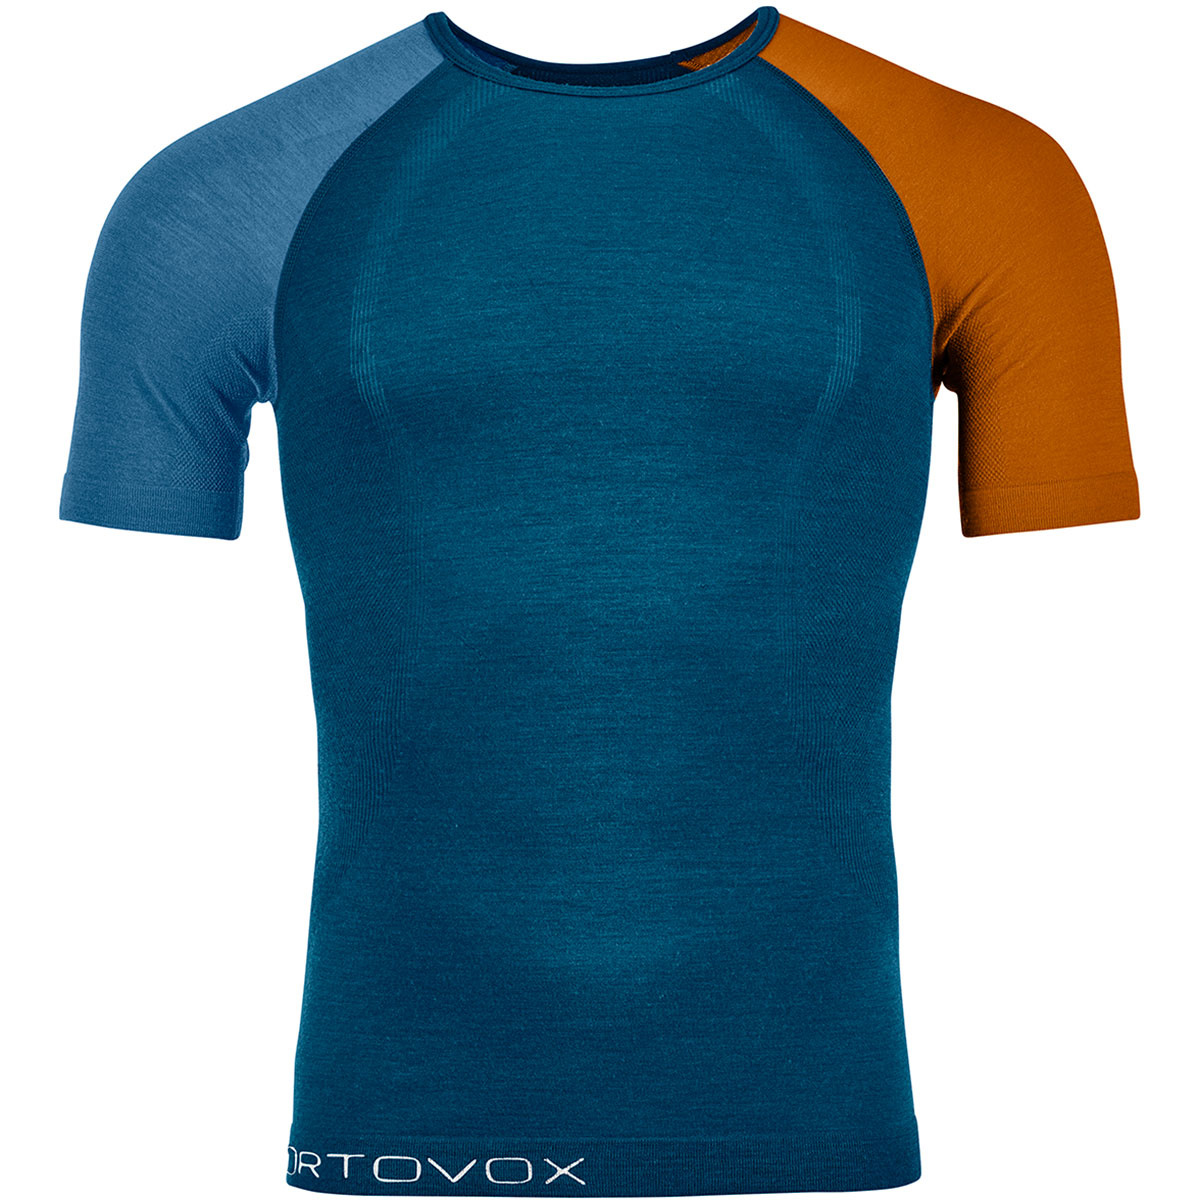 Ortovox Herren 120 Comp Light T-Shirt von Ortovox